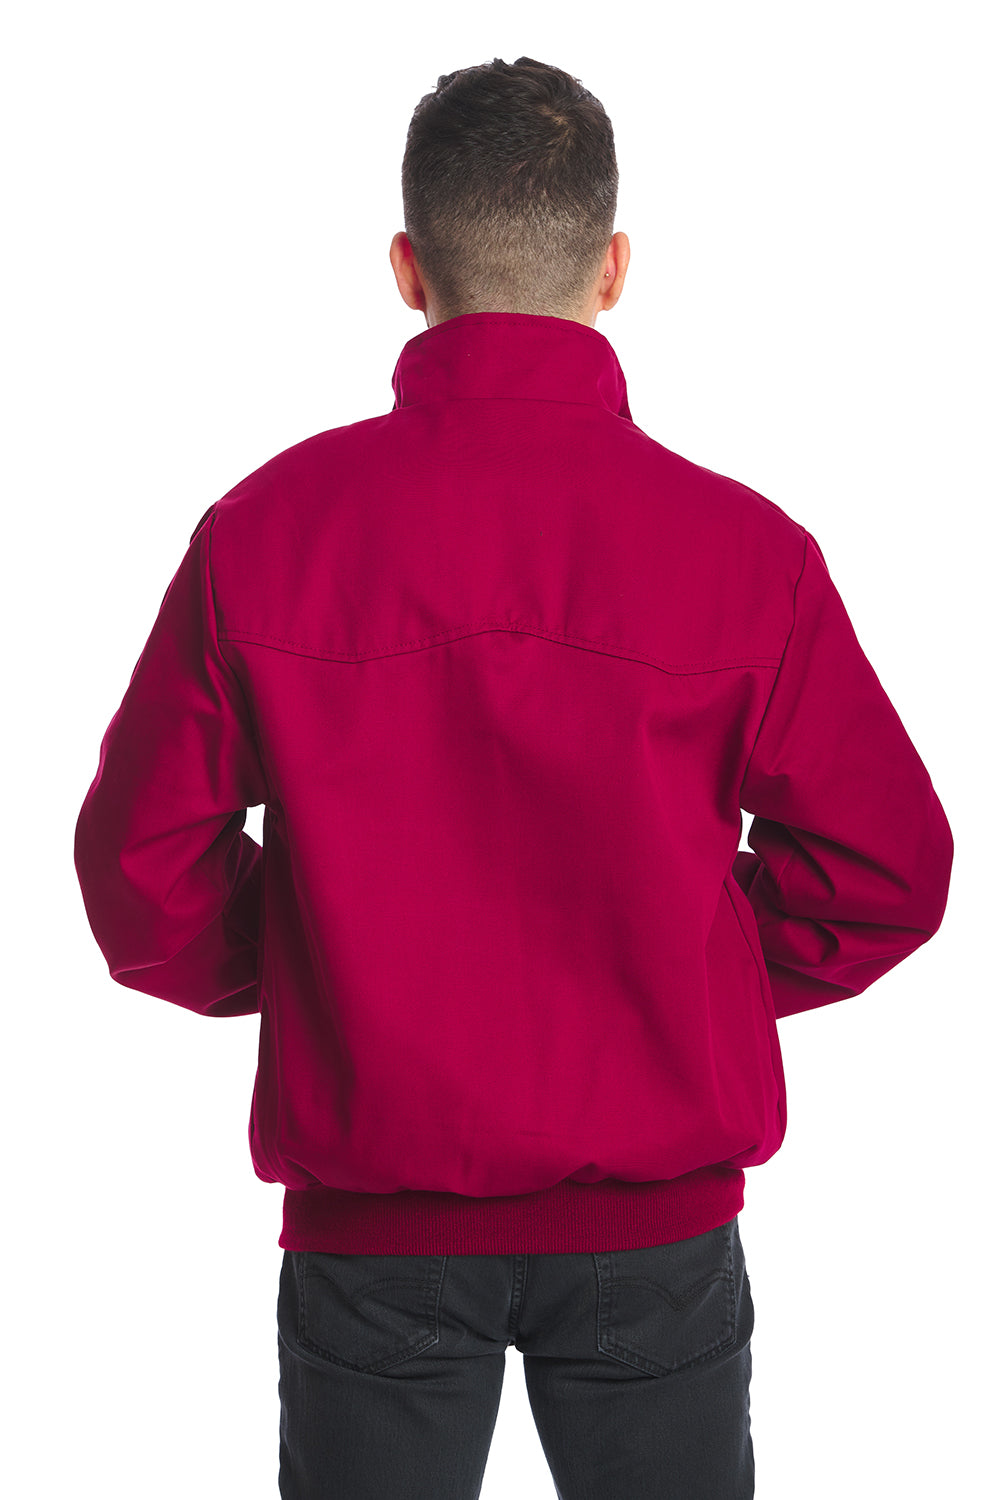 Banned Alternative Unisex Harrington Jacket